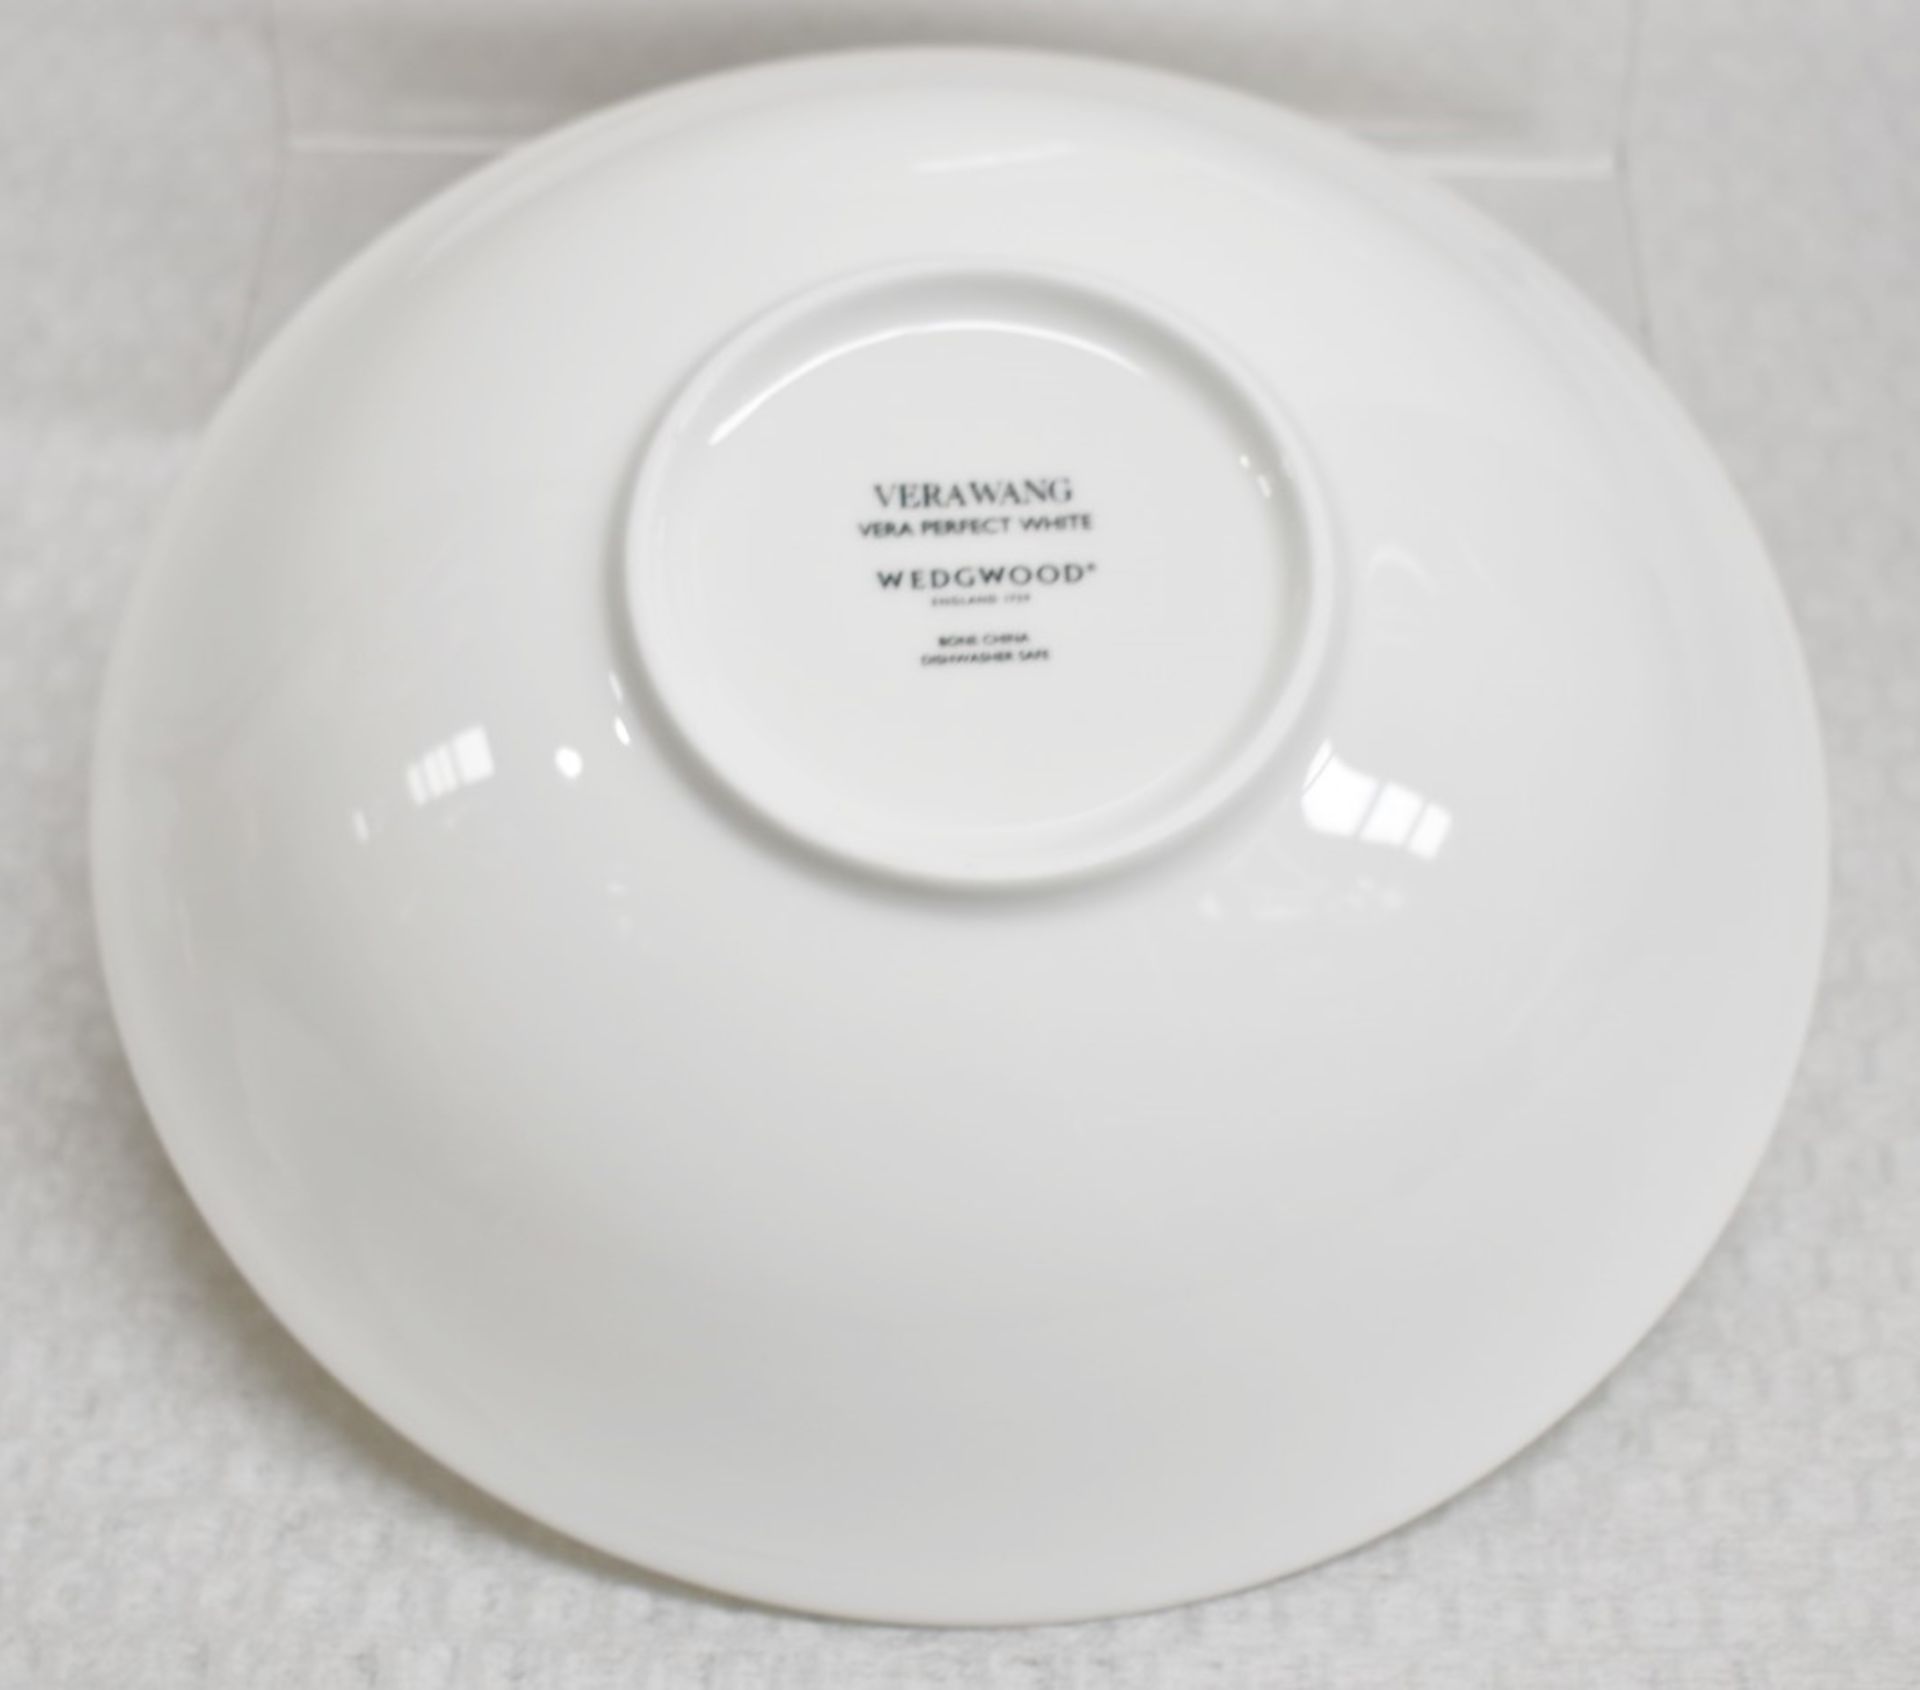 2 x WEDGWOOD / VERA WANG 'Perfect White' Fine Bone China Nesting Bowls - Unused Boxed Stock - Ref: - Image 5 of 7